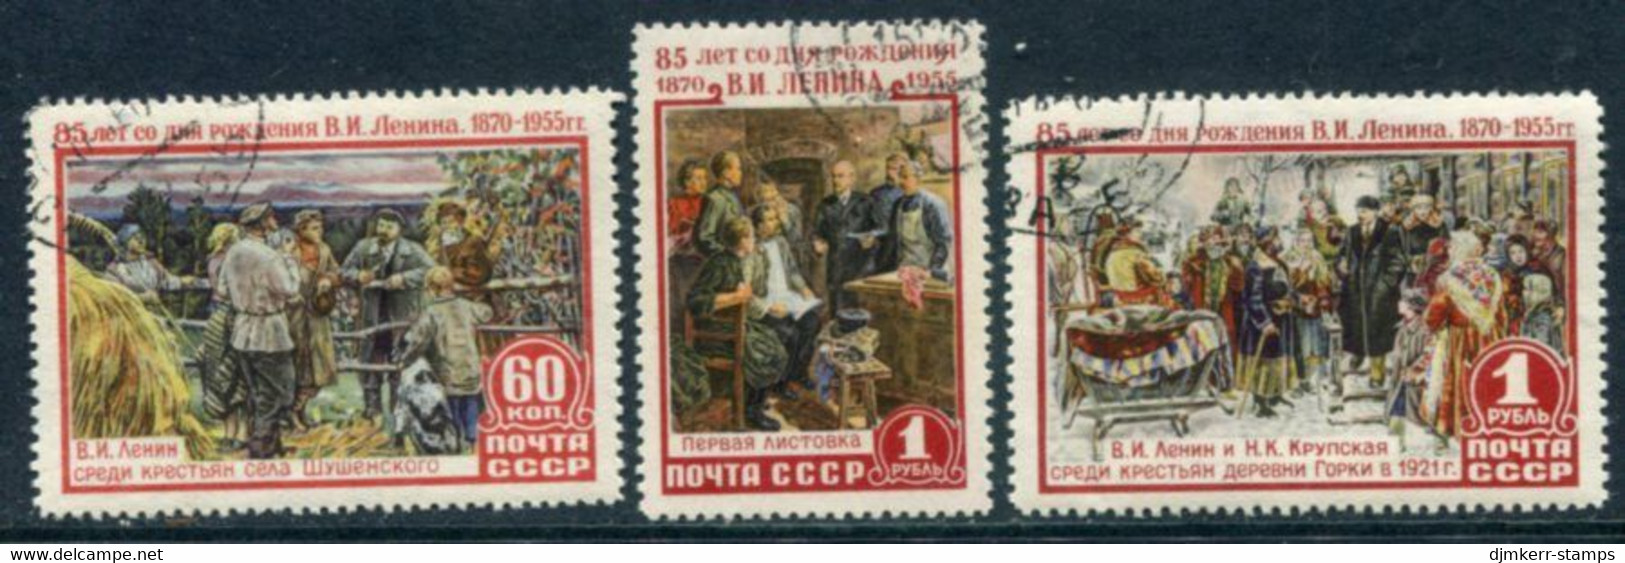 SOVIET UNION 1955 Lenin Birth Anniversary Used.  Michel 1756-58 - Used Stamps